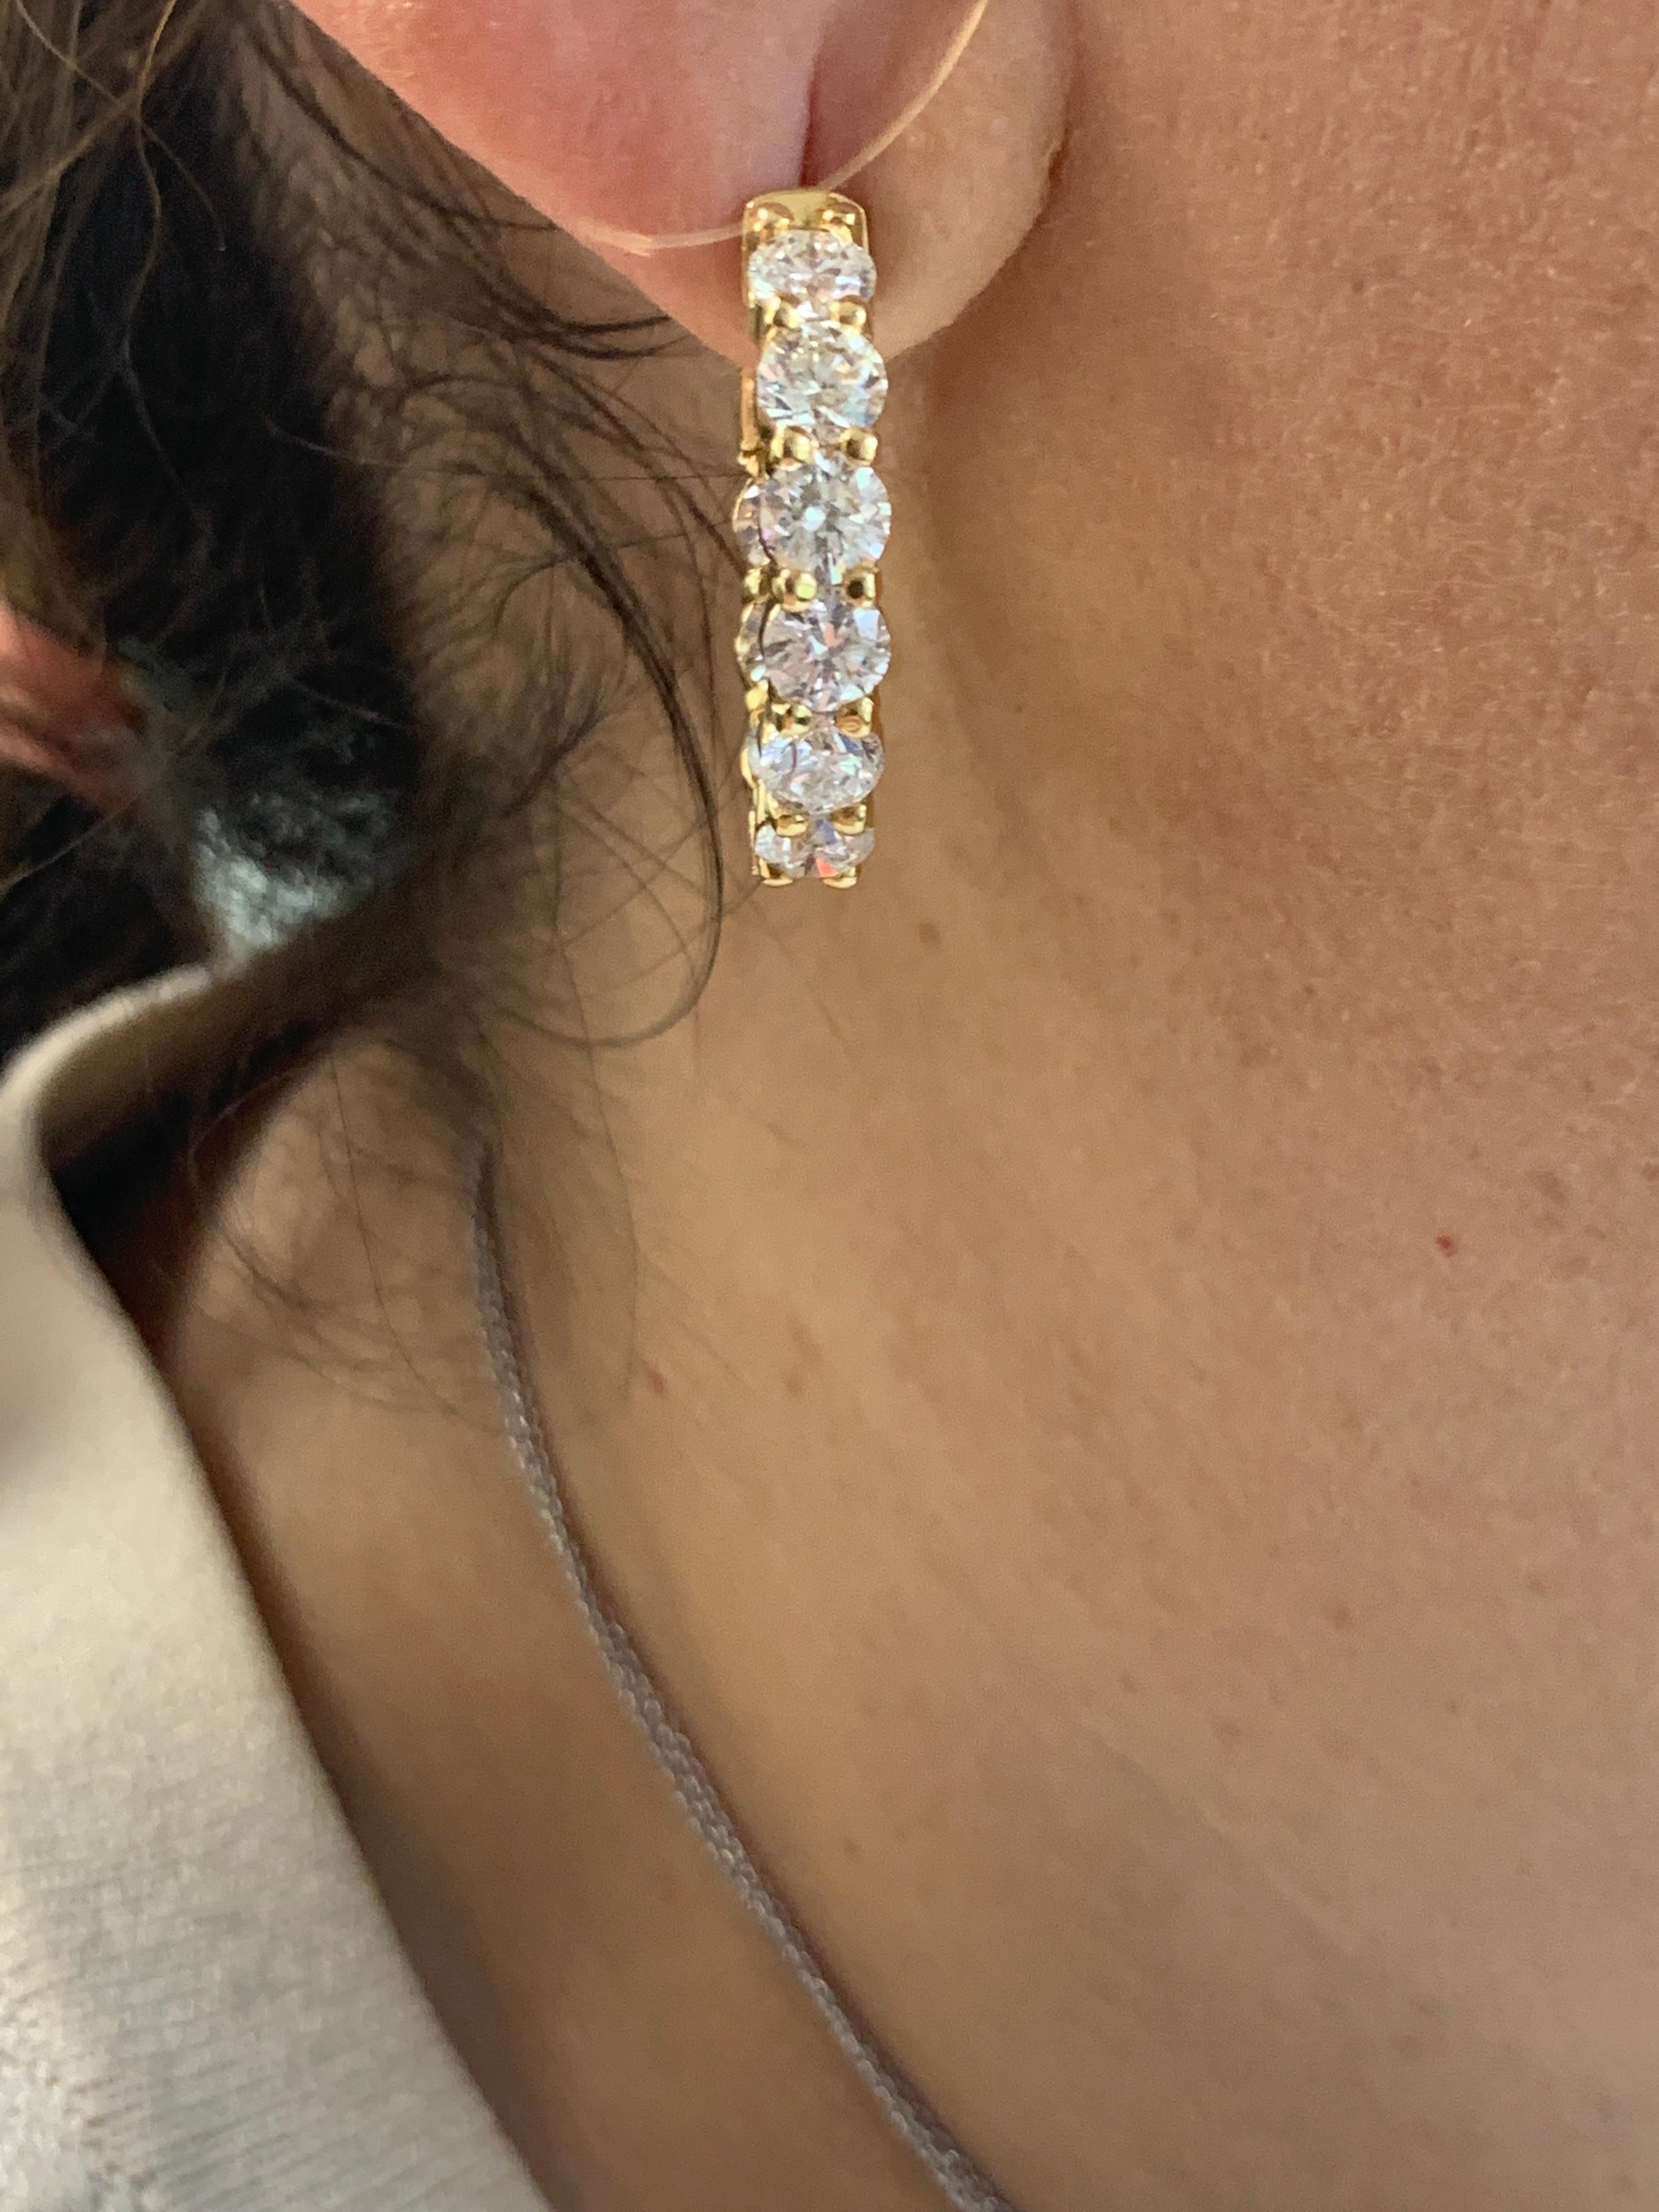 Classic diamond hoops

18K Yellow gold hoop earrings with round diamonds
Diameter: 0.75